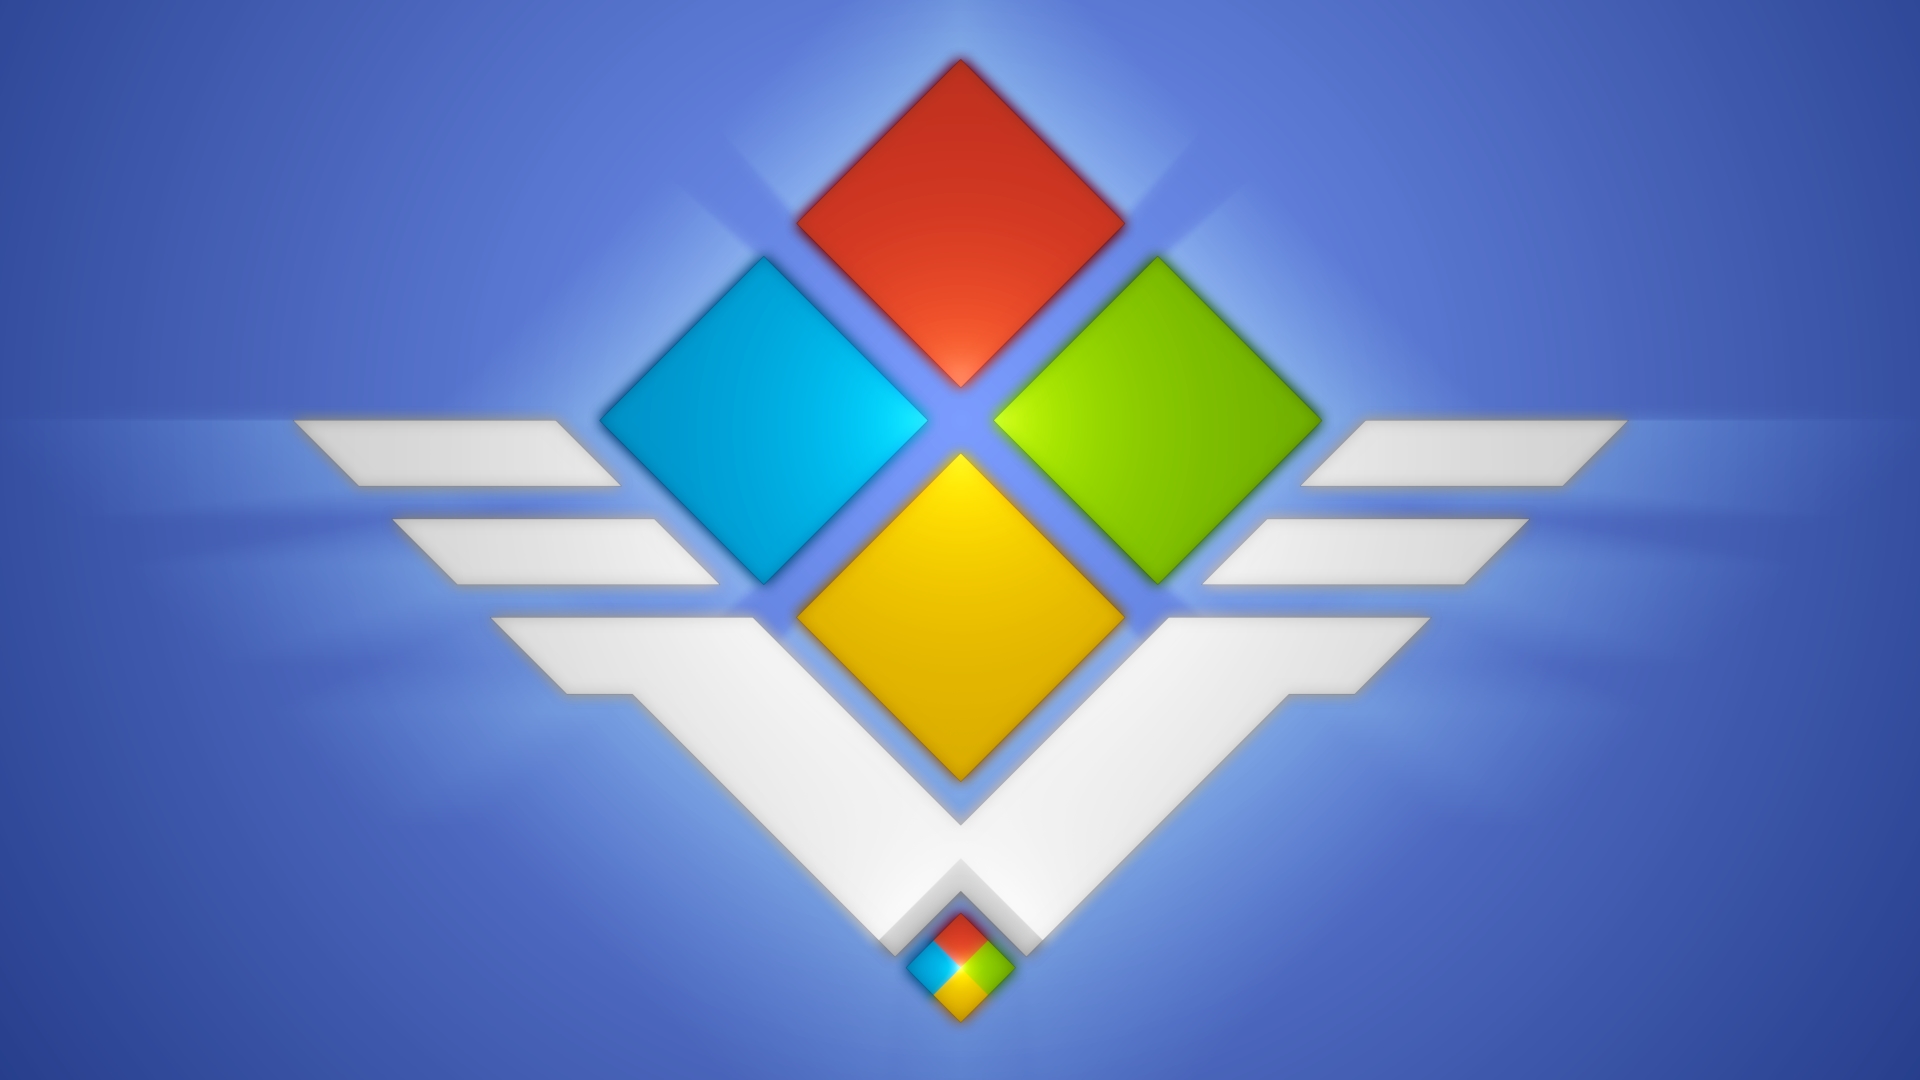 Windows Seven (7) Union Wallpaper (1080p) by LeetZero on ...